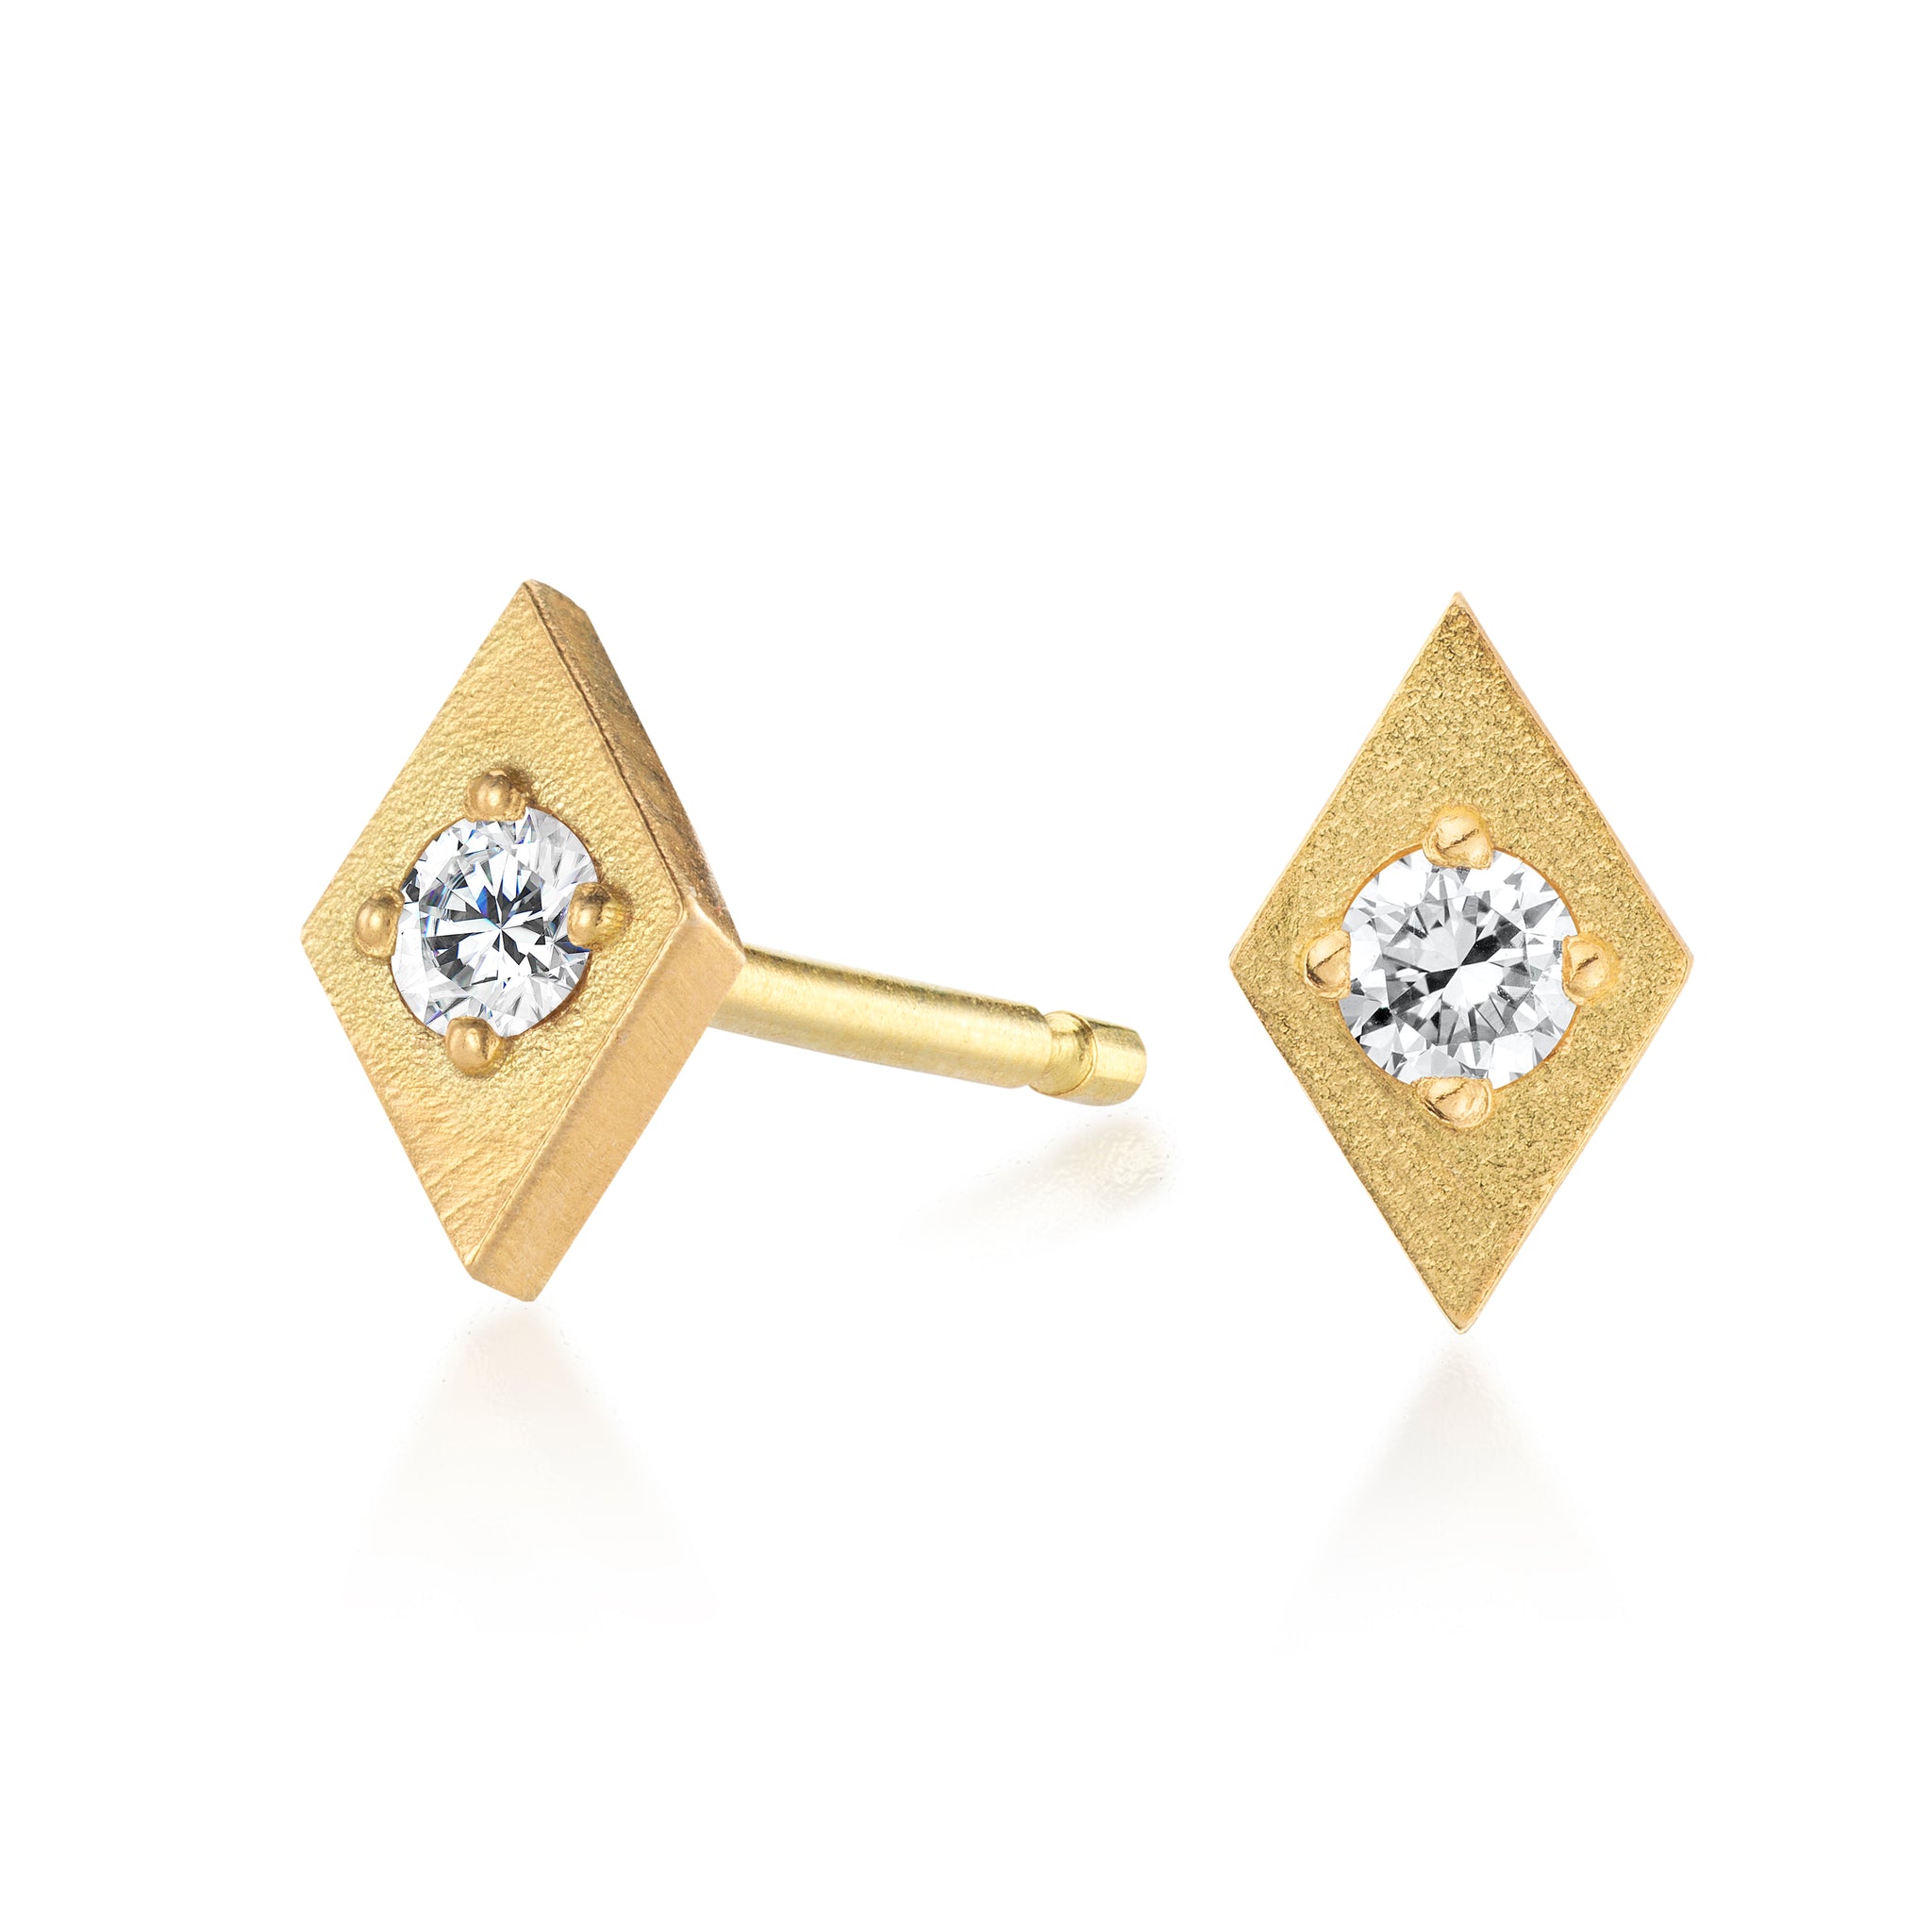 Harlequin Diamond Stud Earrings in 18ct Gold